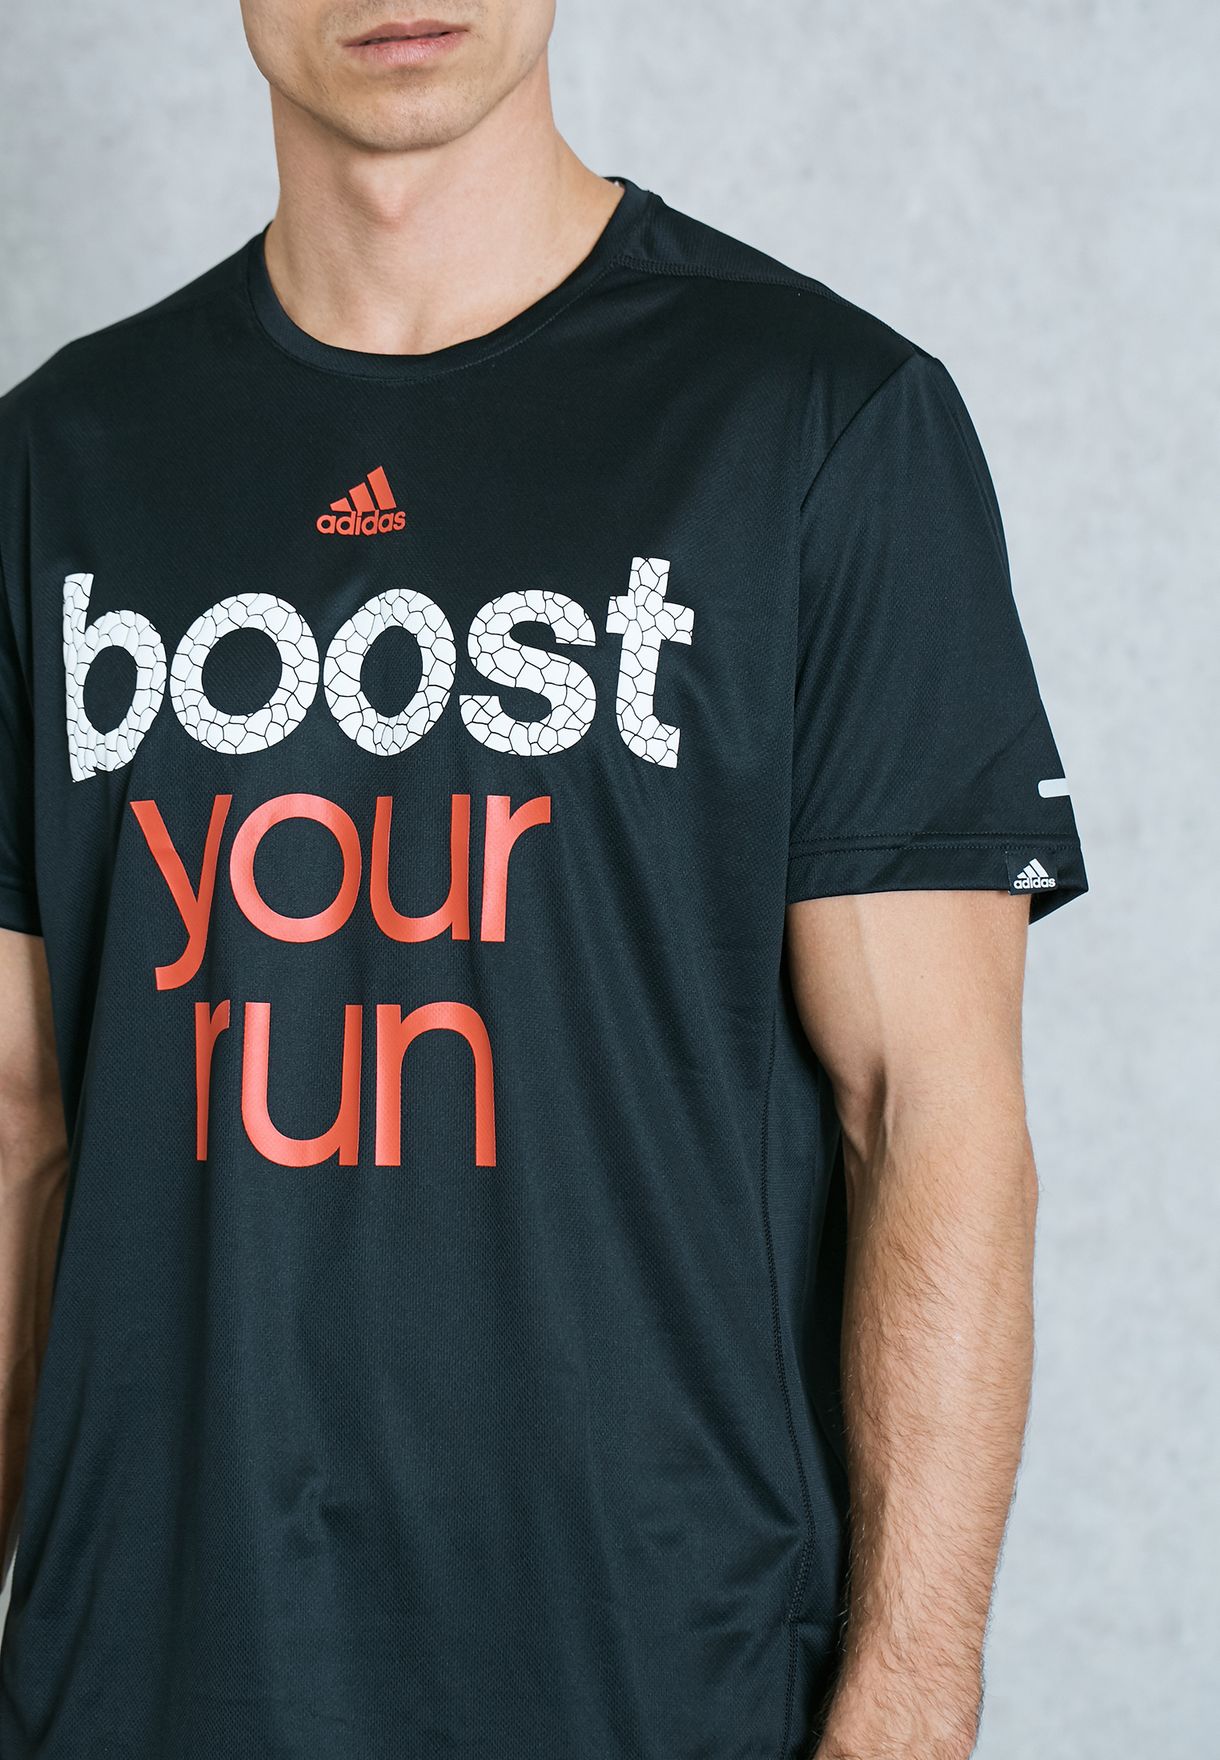 adidas boost your run t shirt